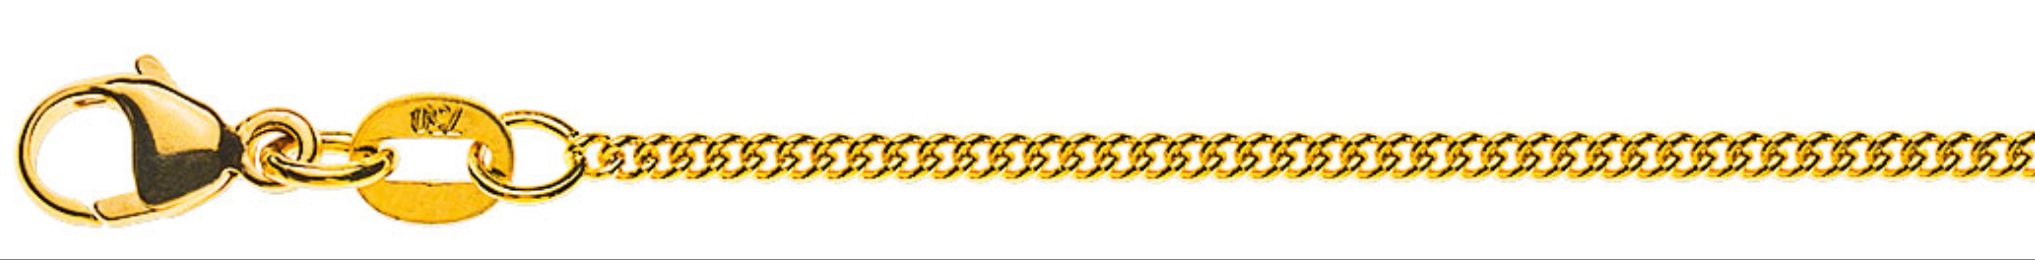 AURONOS Prestige Necklace yellow gold 18K round curb chain 40cm 1.6mm